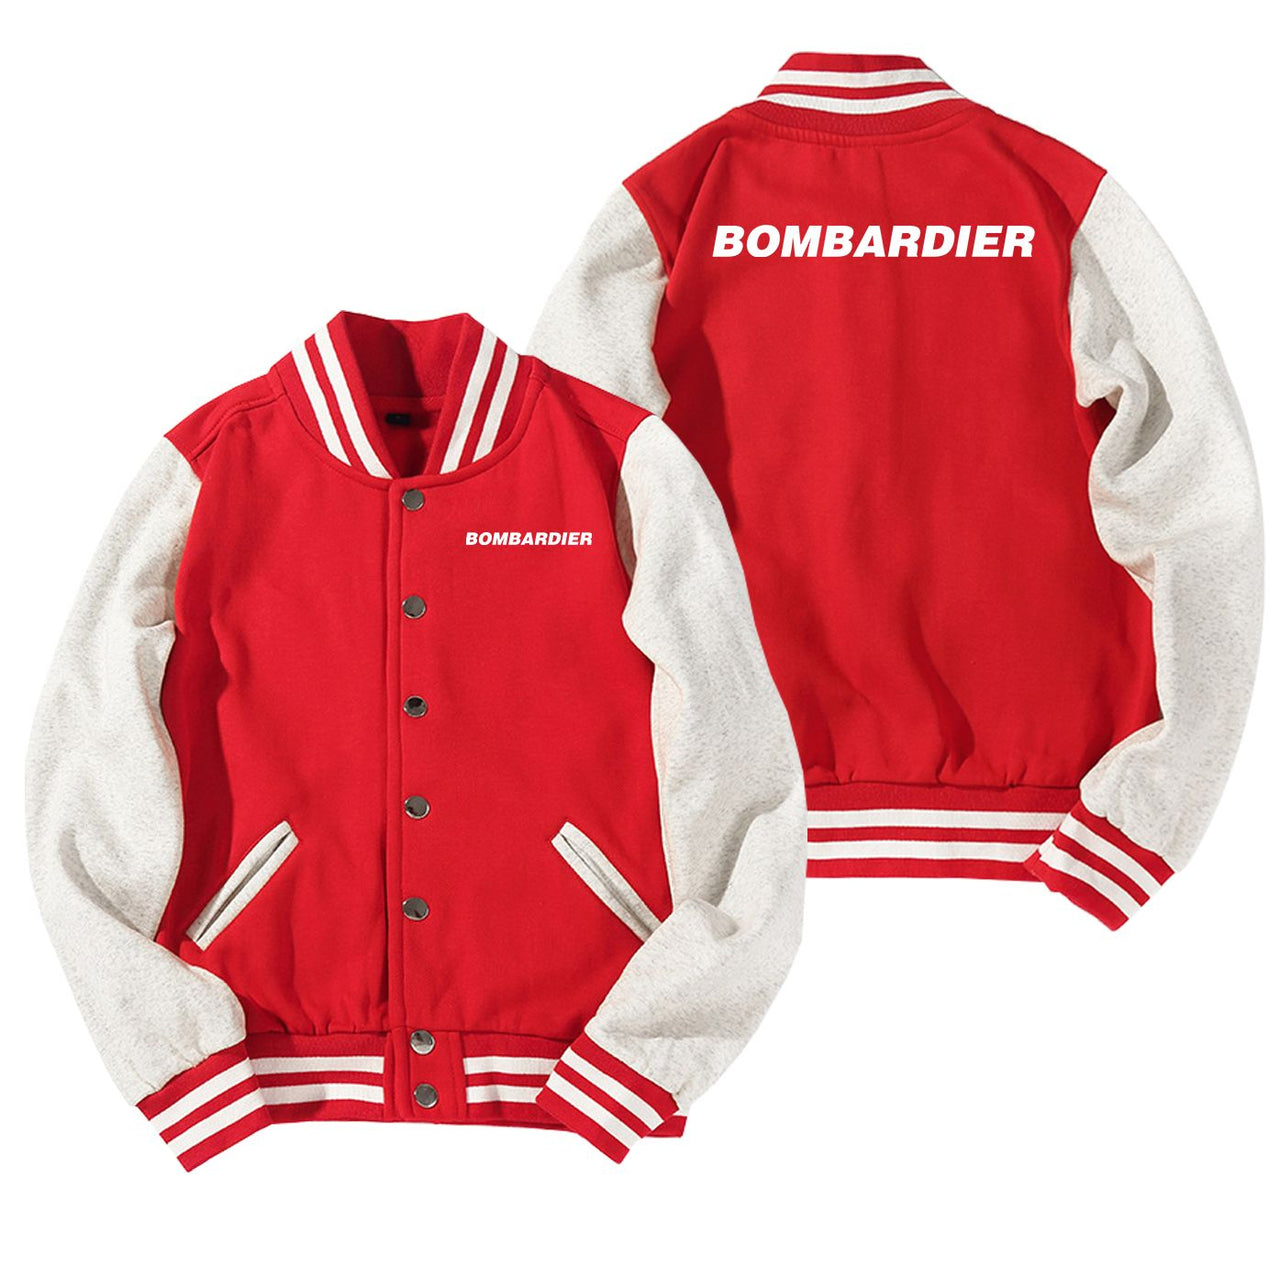 Bombardier & Text Designed Baseball Style Jackets